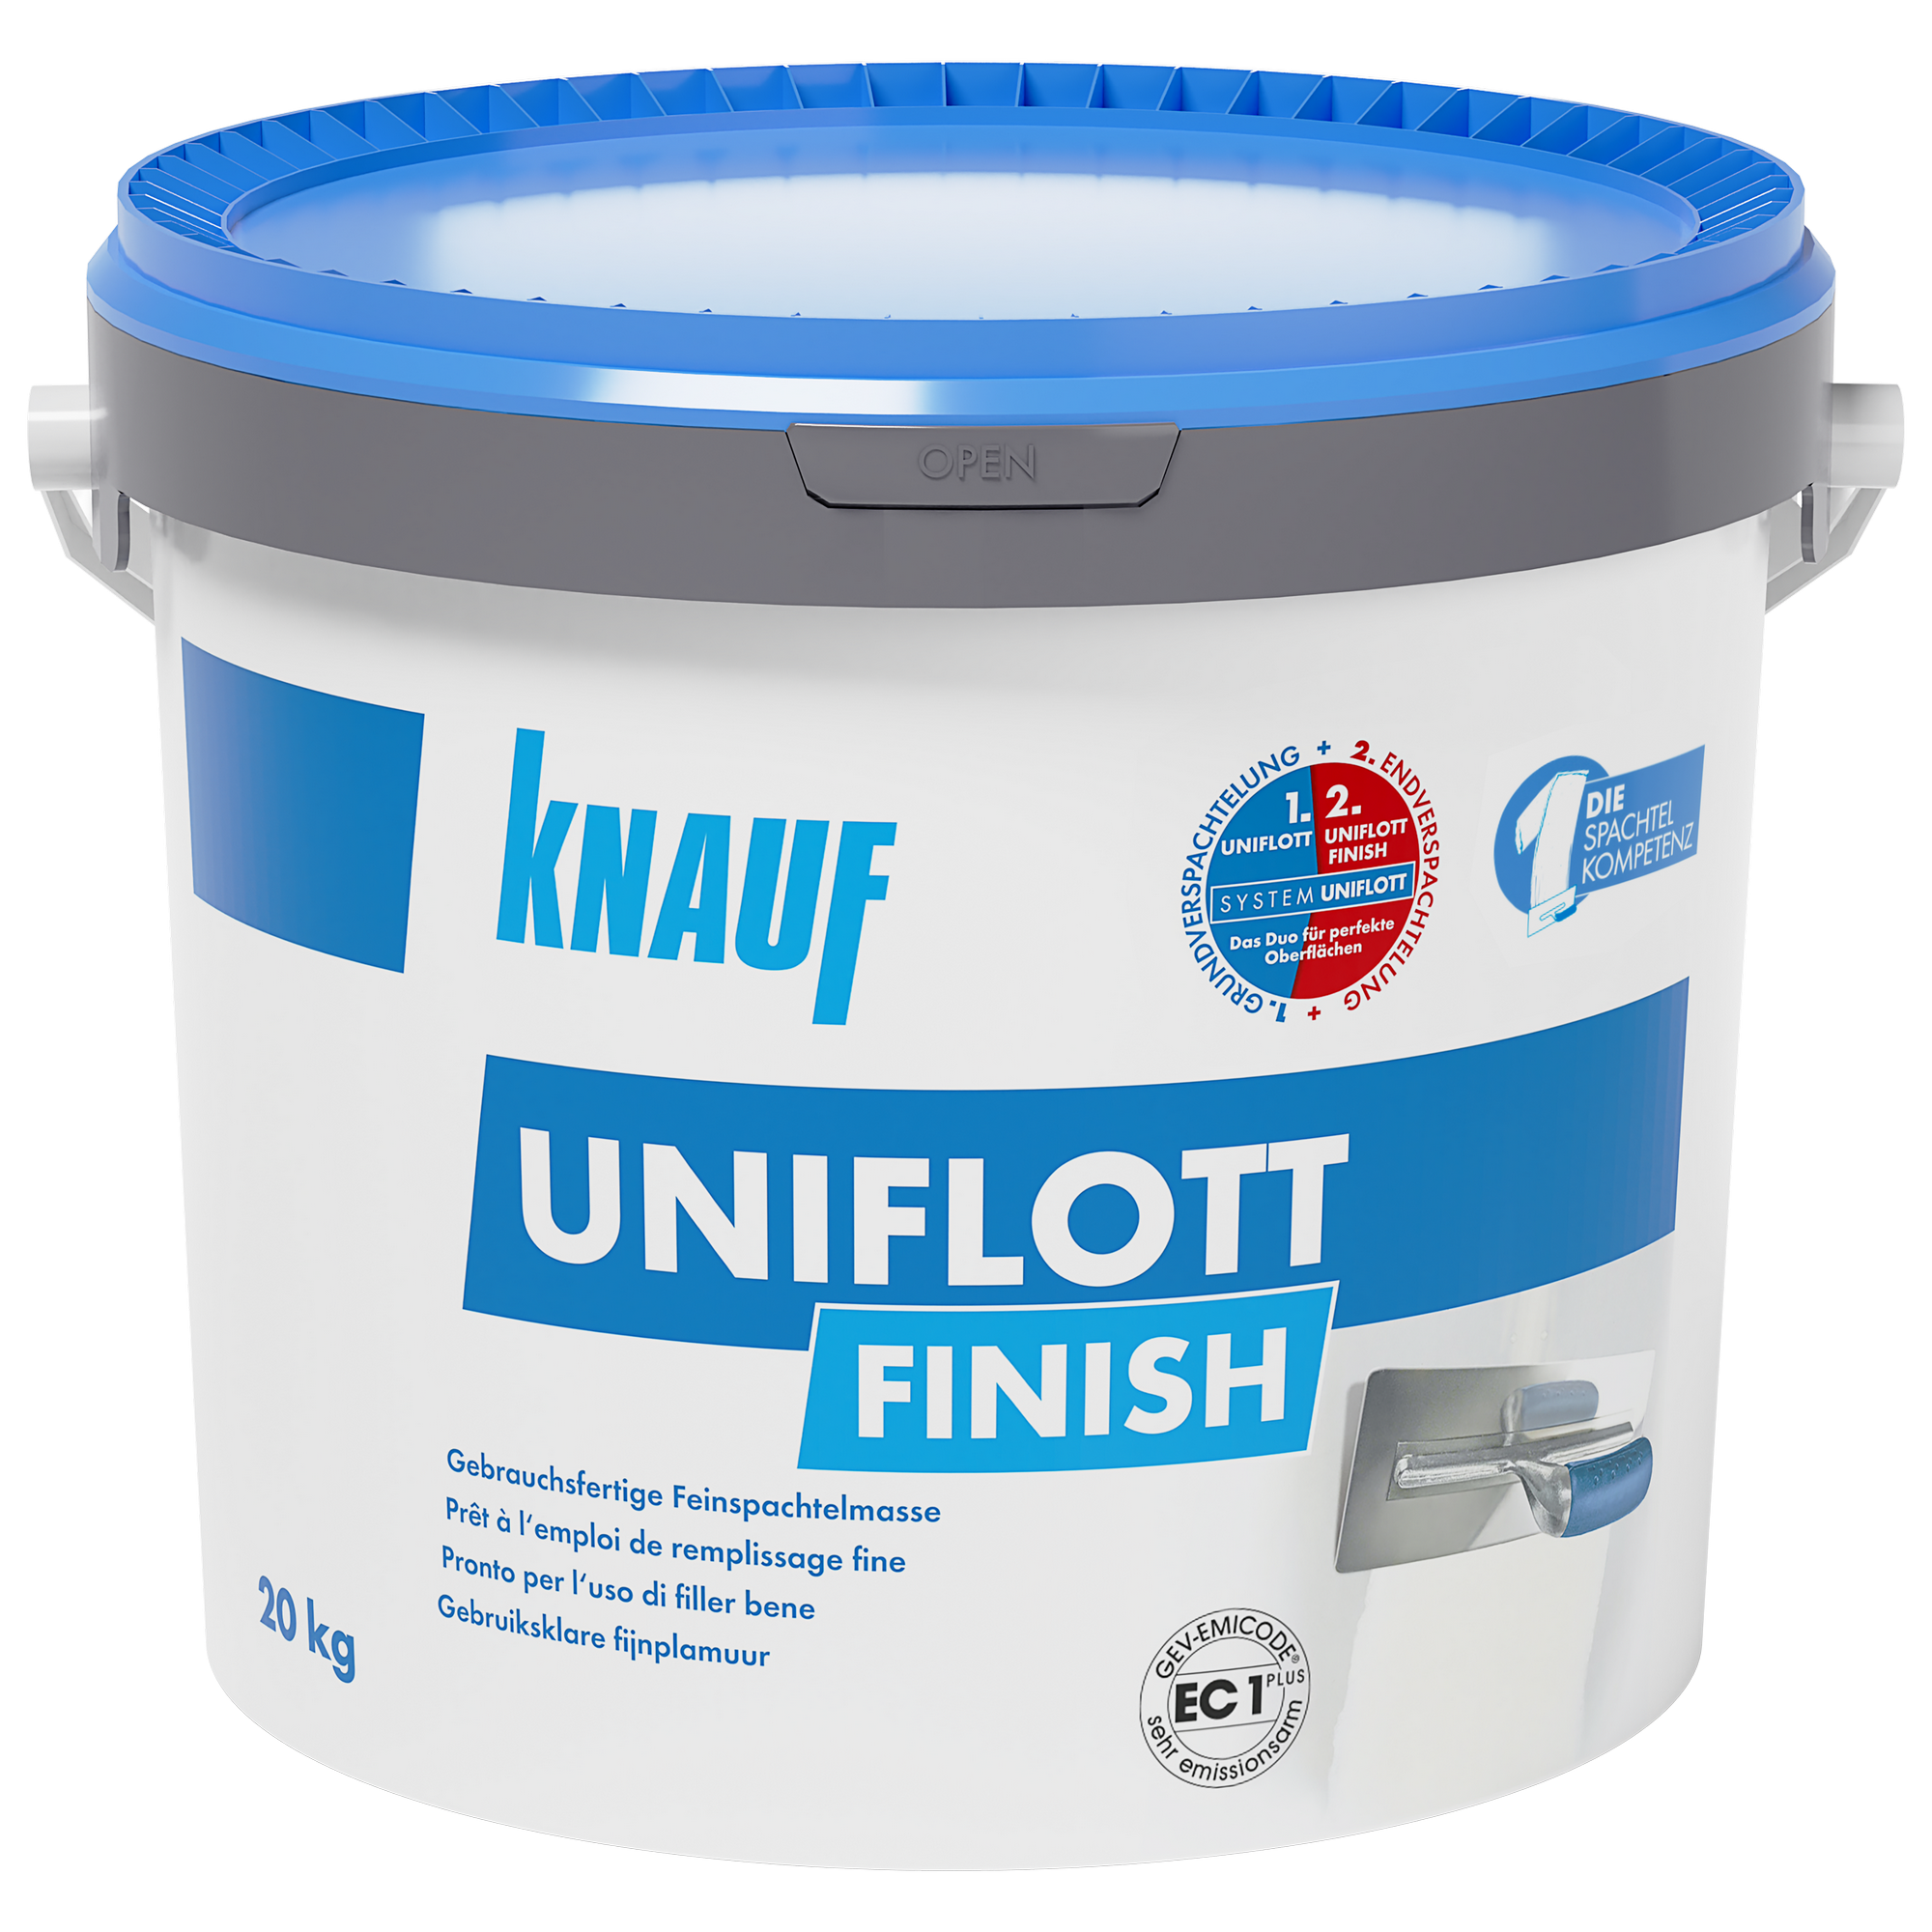 Feinspachtelmasse 'Uniflott Finish' 20 kg + product picture